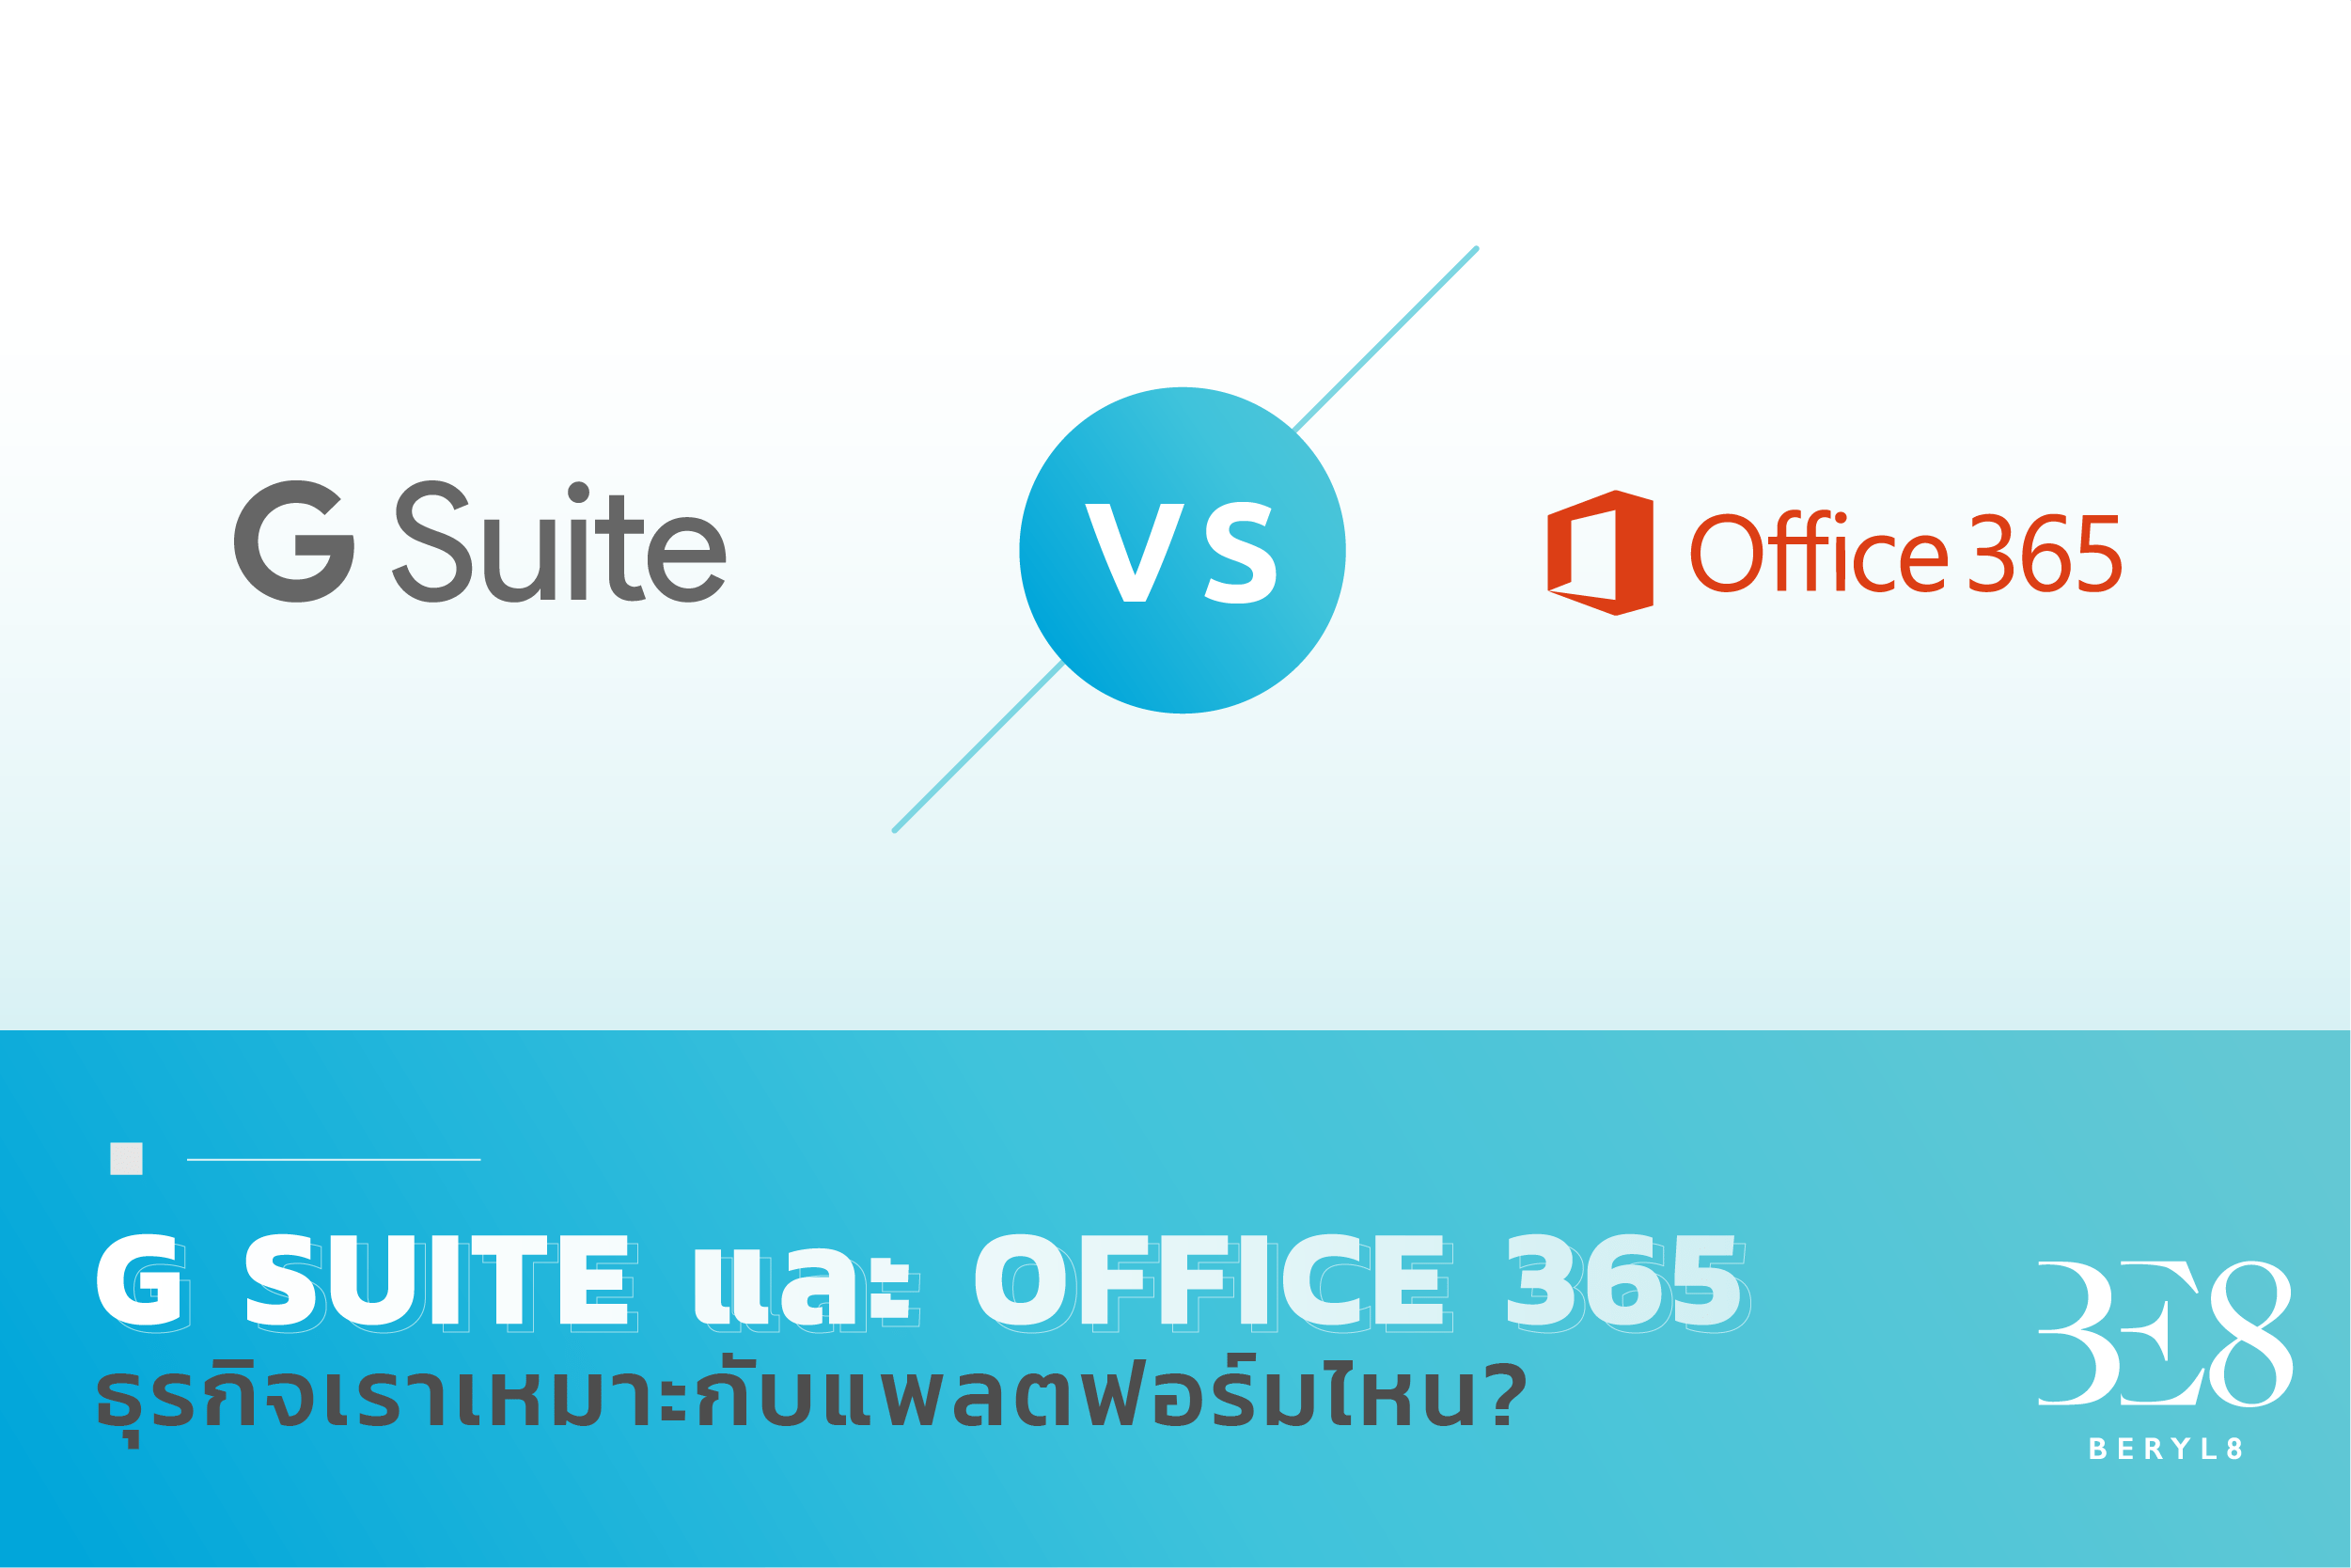 G Suite / Office 365? คำตอบที่ใช่สำหรับเครื่องมือการทำธุรกิจ